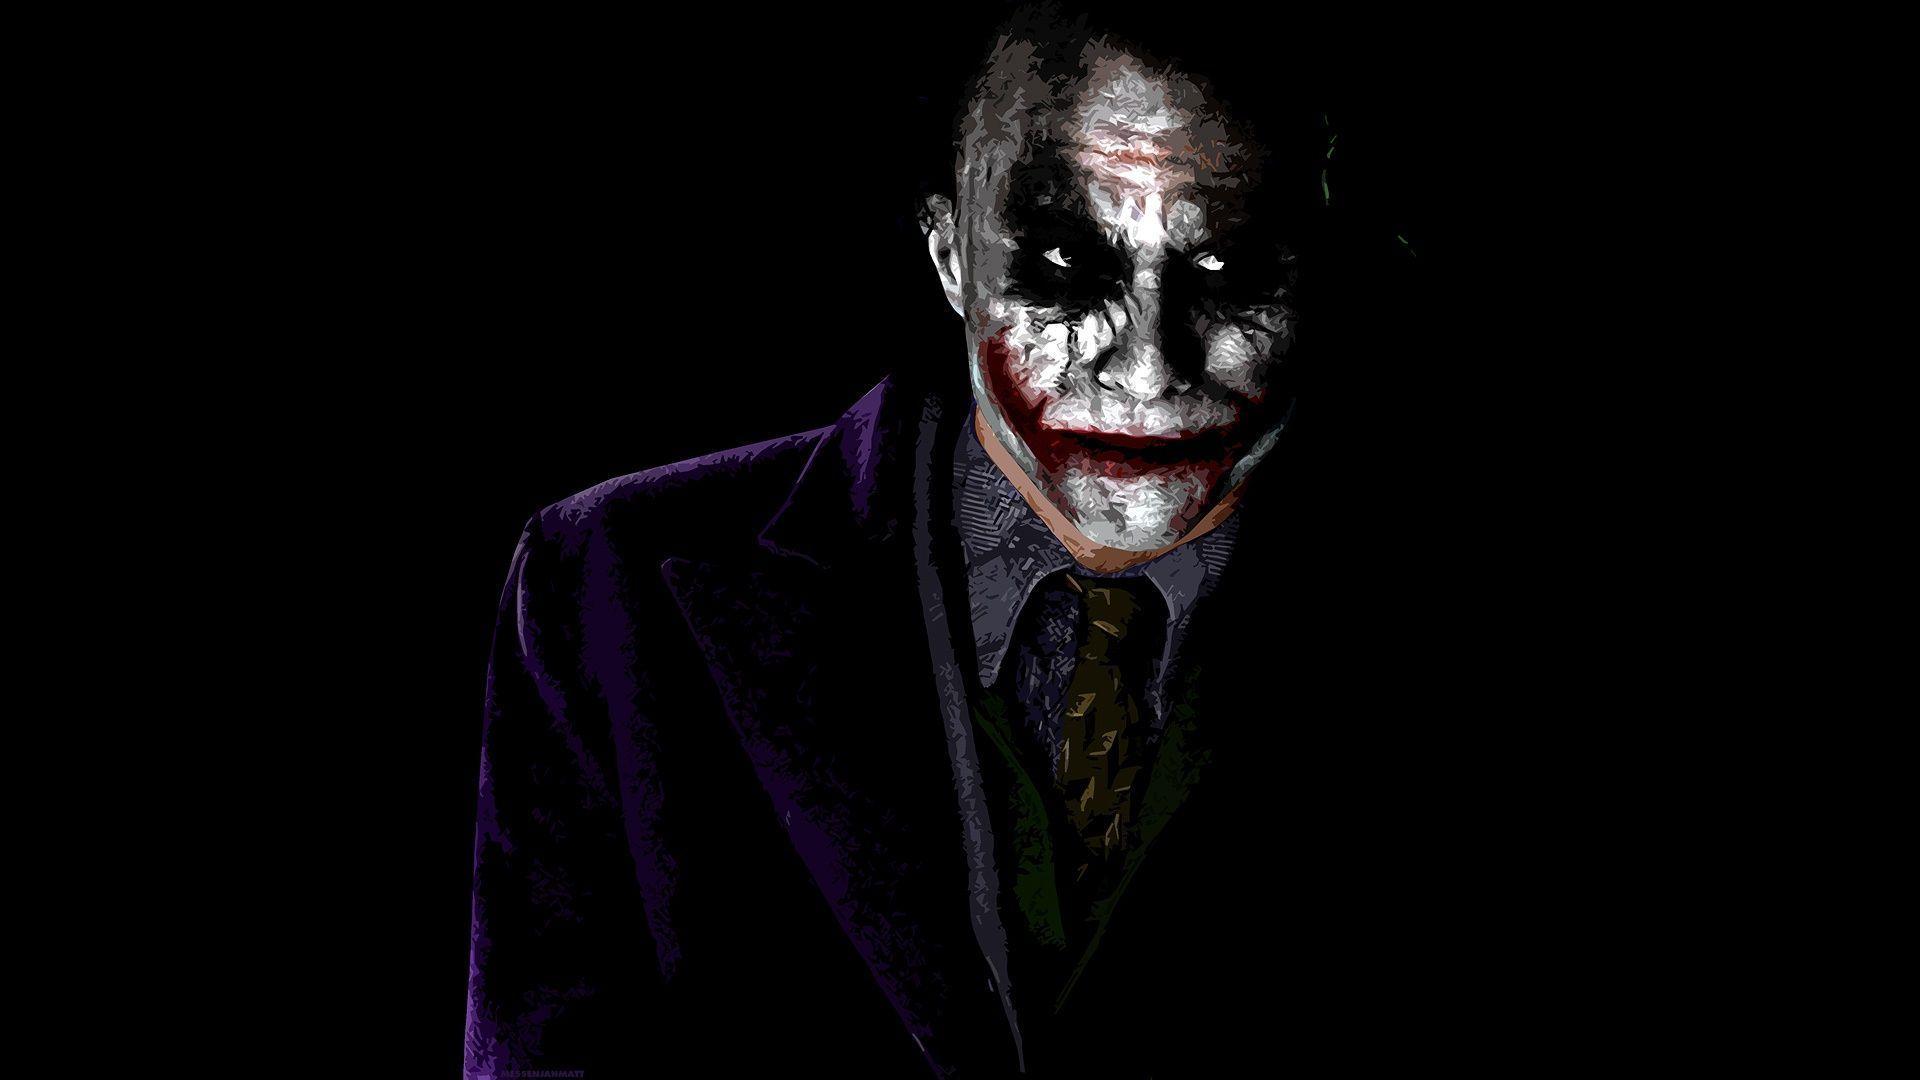 Joker Wallpaper Hd: Memes For Gt The Joker Wallpaper HD. .Ssofc